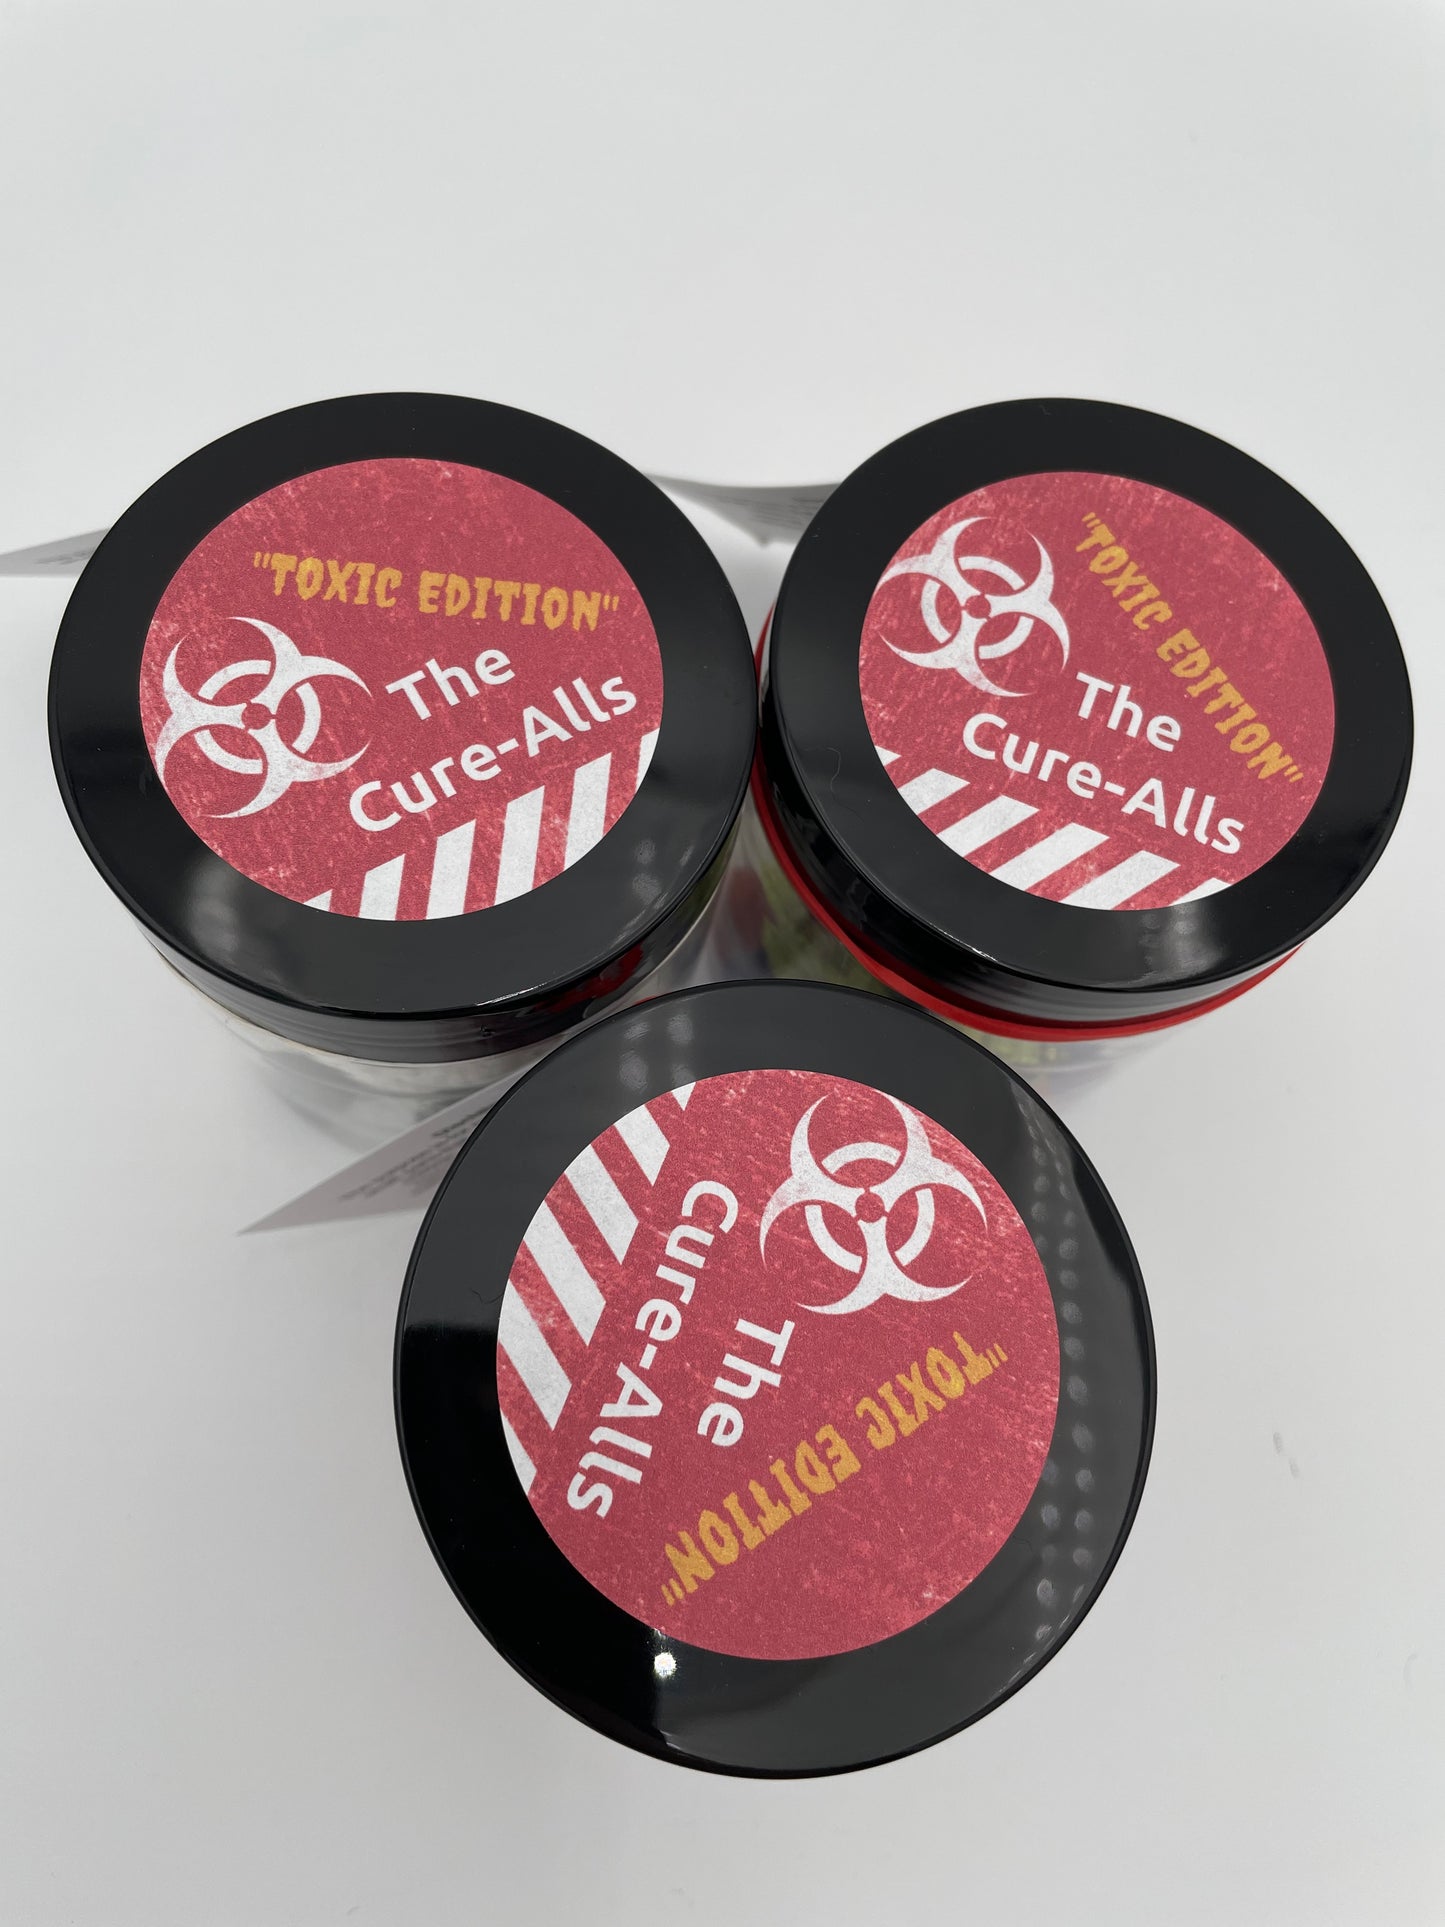 Cure-Alls - Toxic Edition Jars